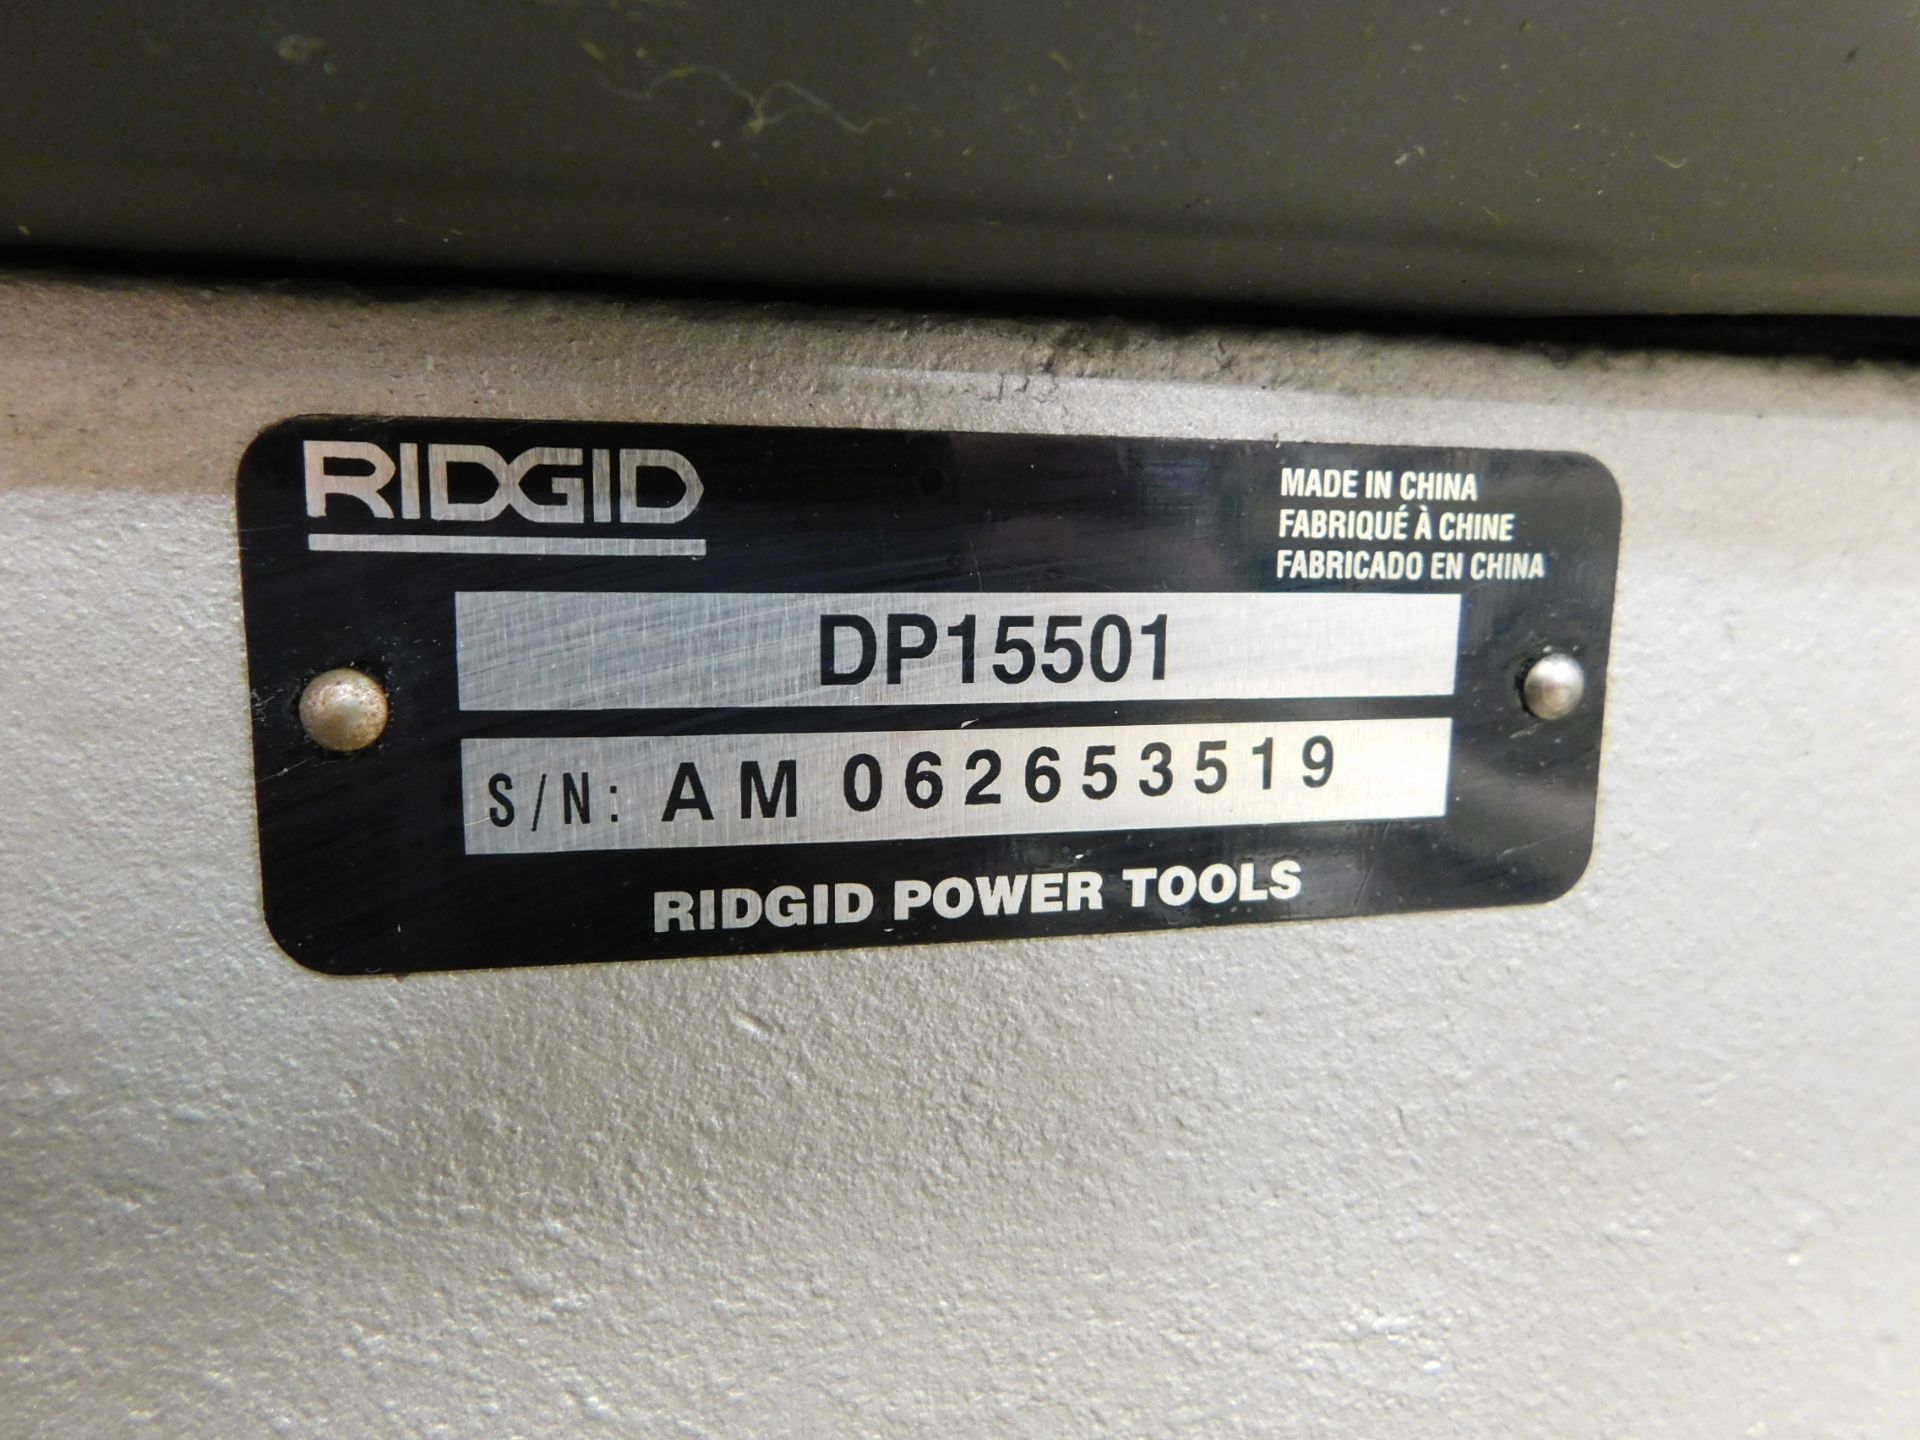 Ridgid Model DP15501, 15 In. Floor Model Drill Press, s/n AM062653519, 110/1/60 AC - Image 11 of 12